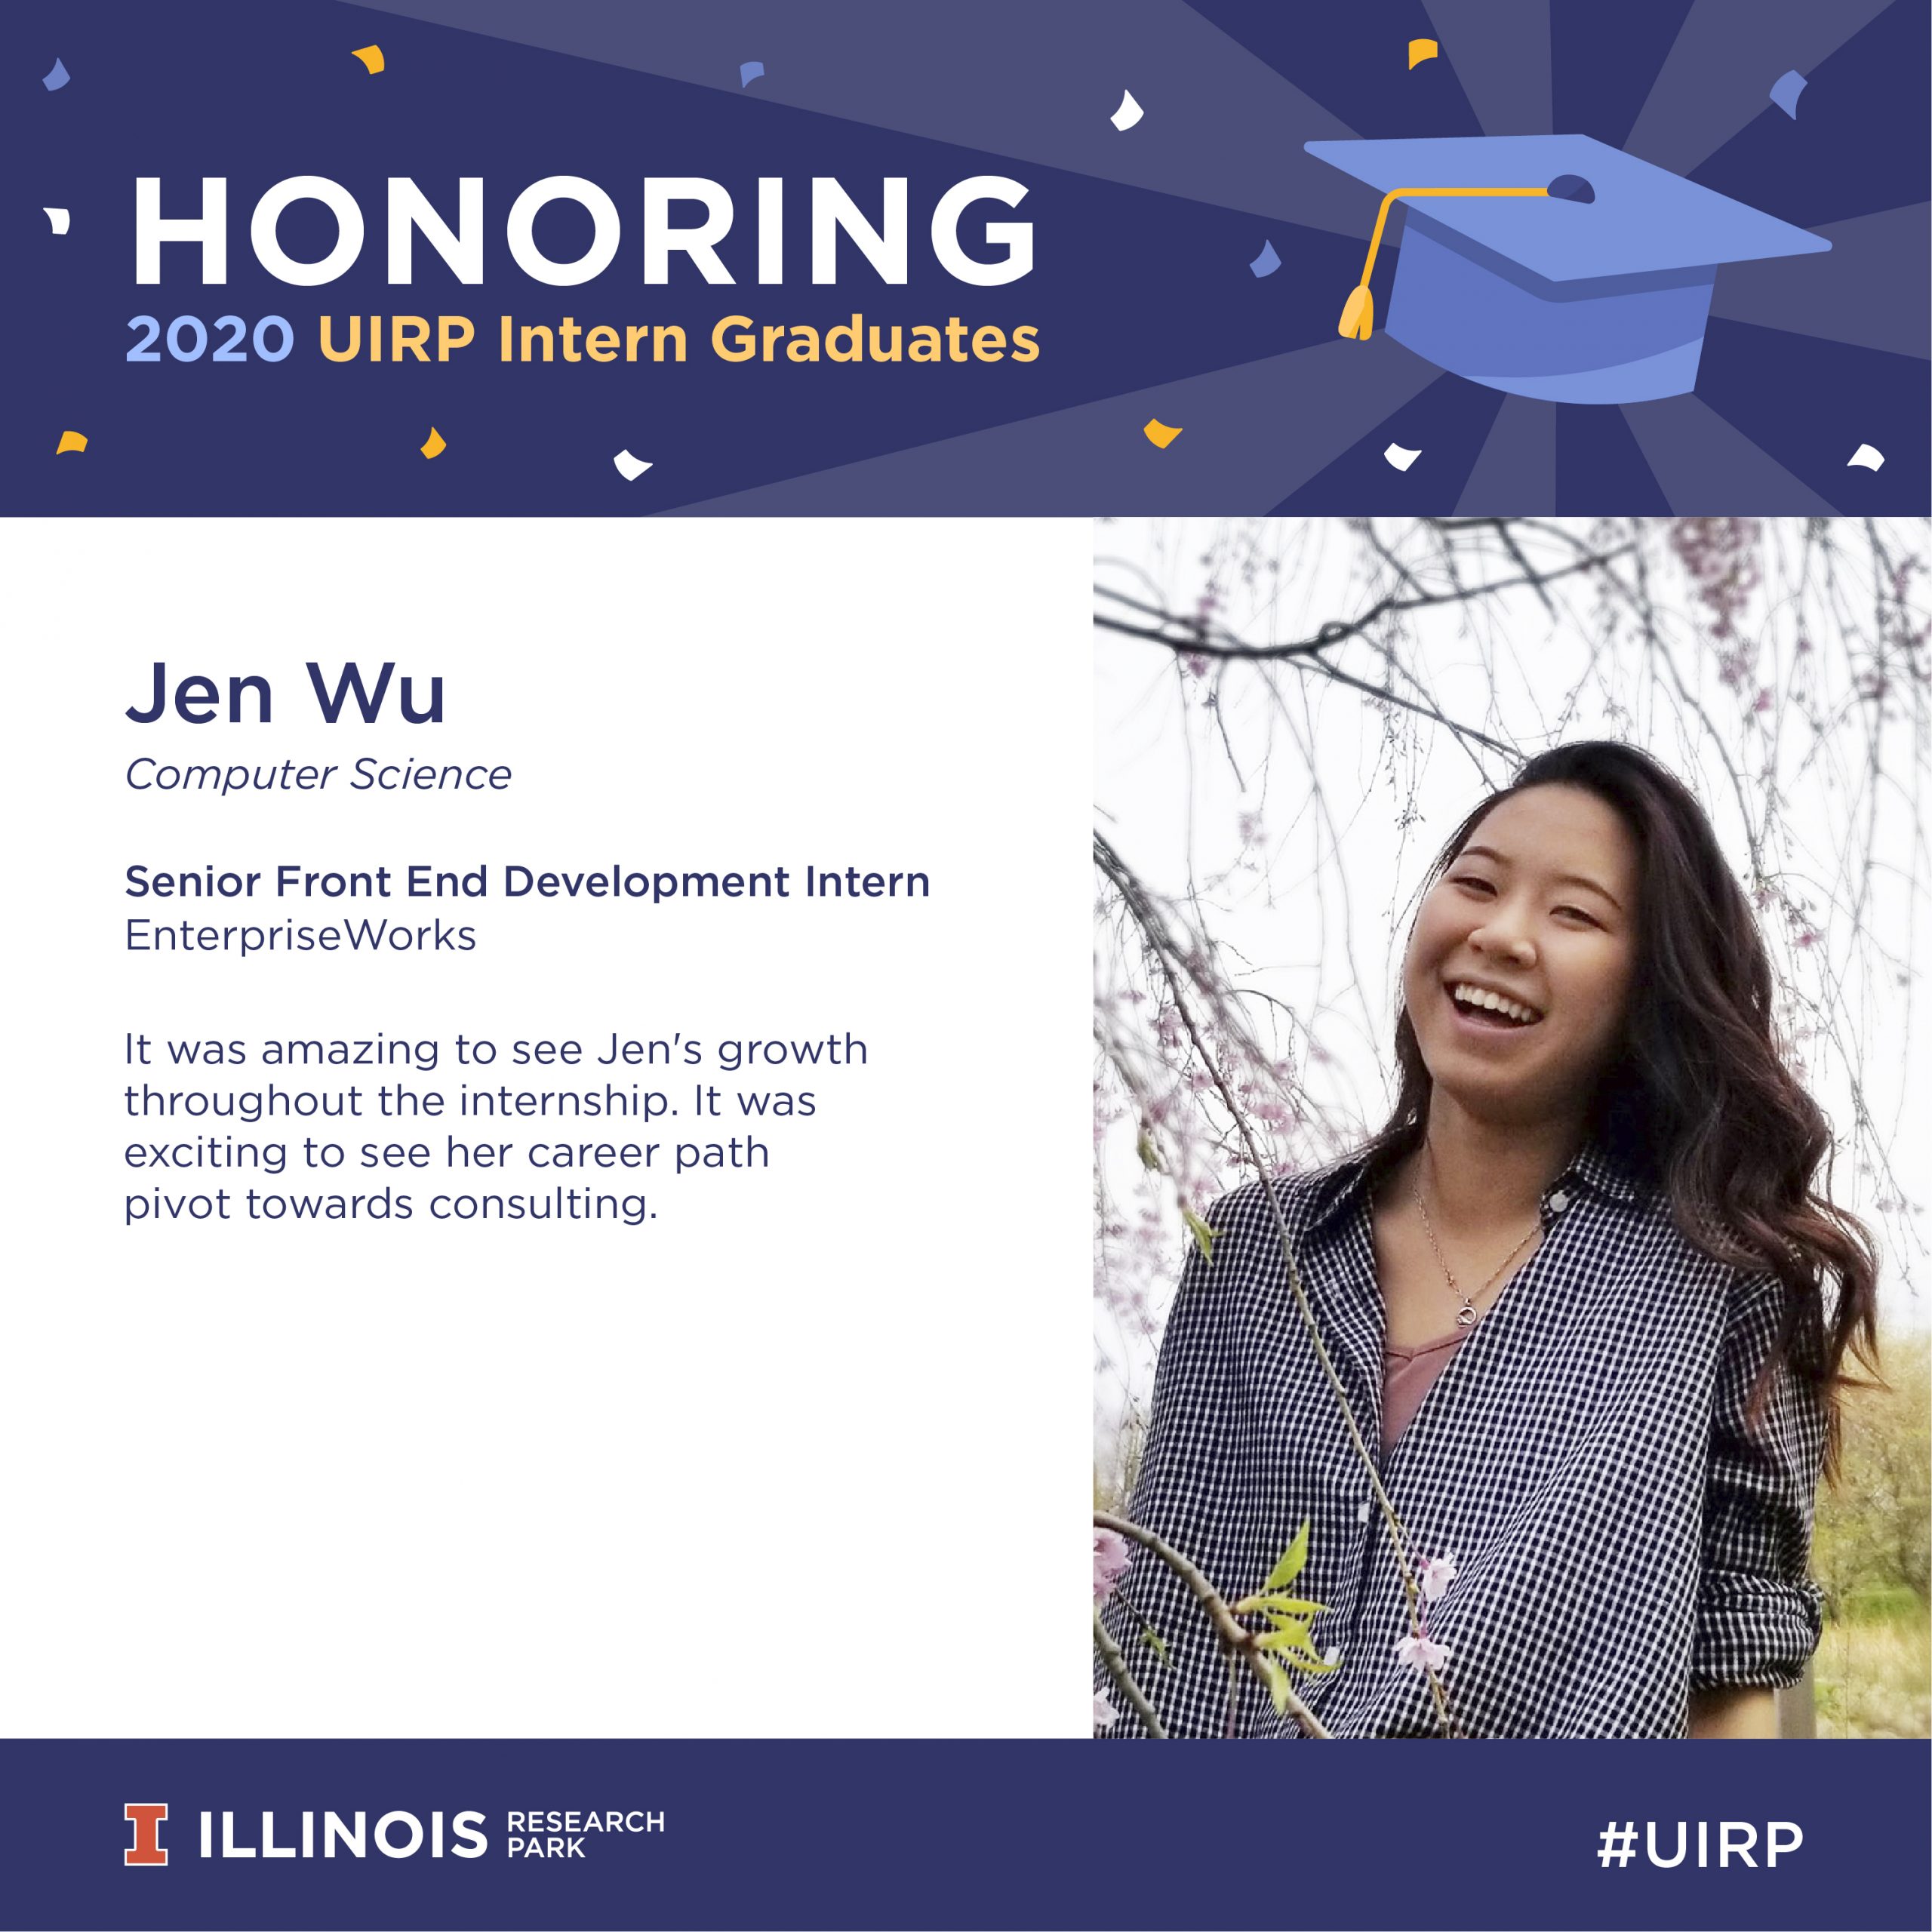 Jen Wu, Senior Front End Development Intern at EnterpriseWorks